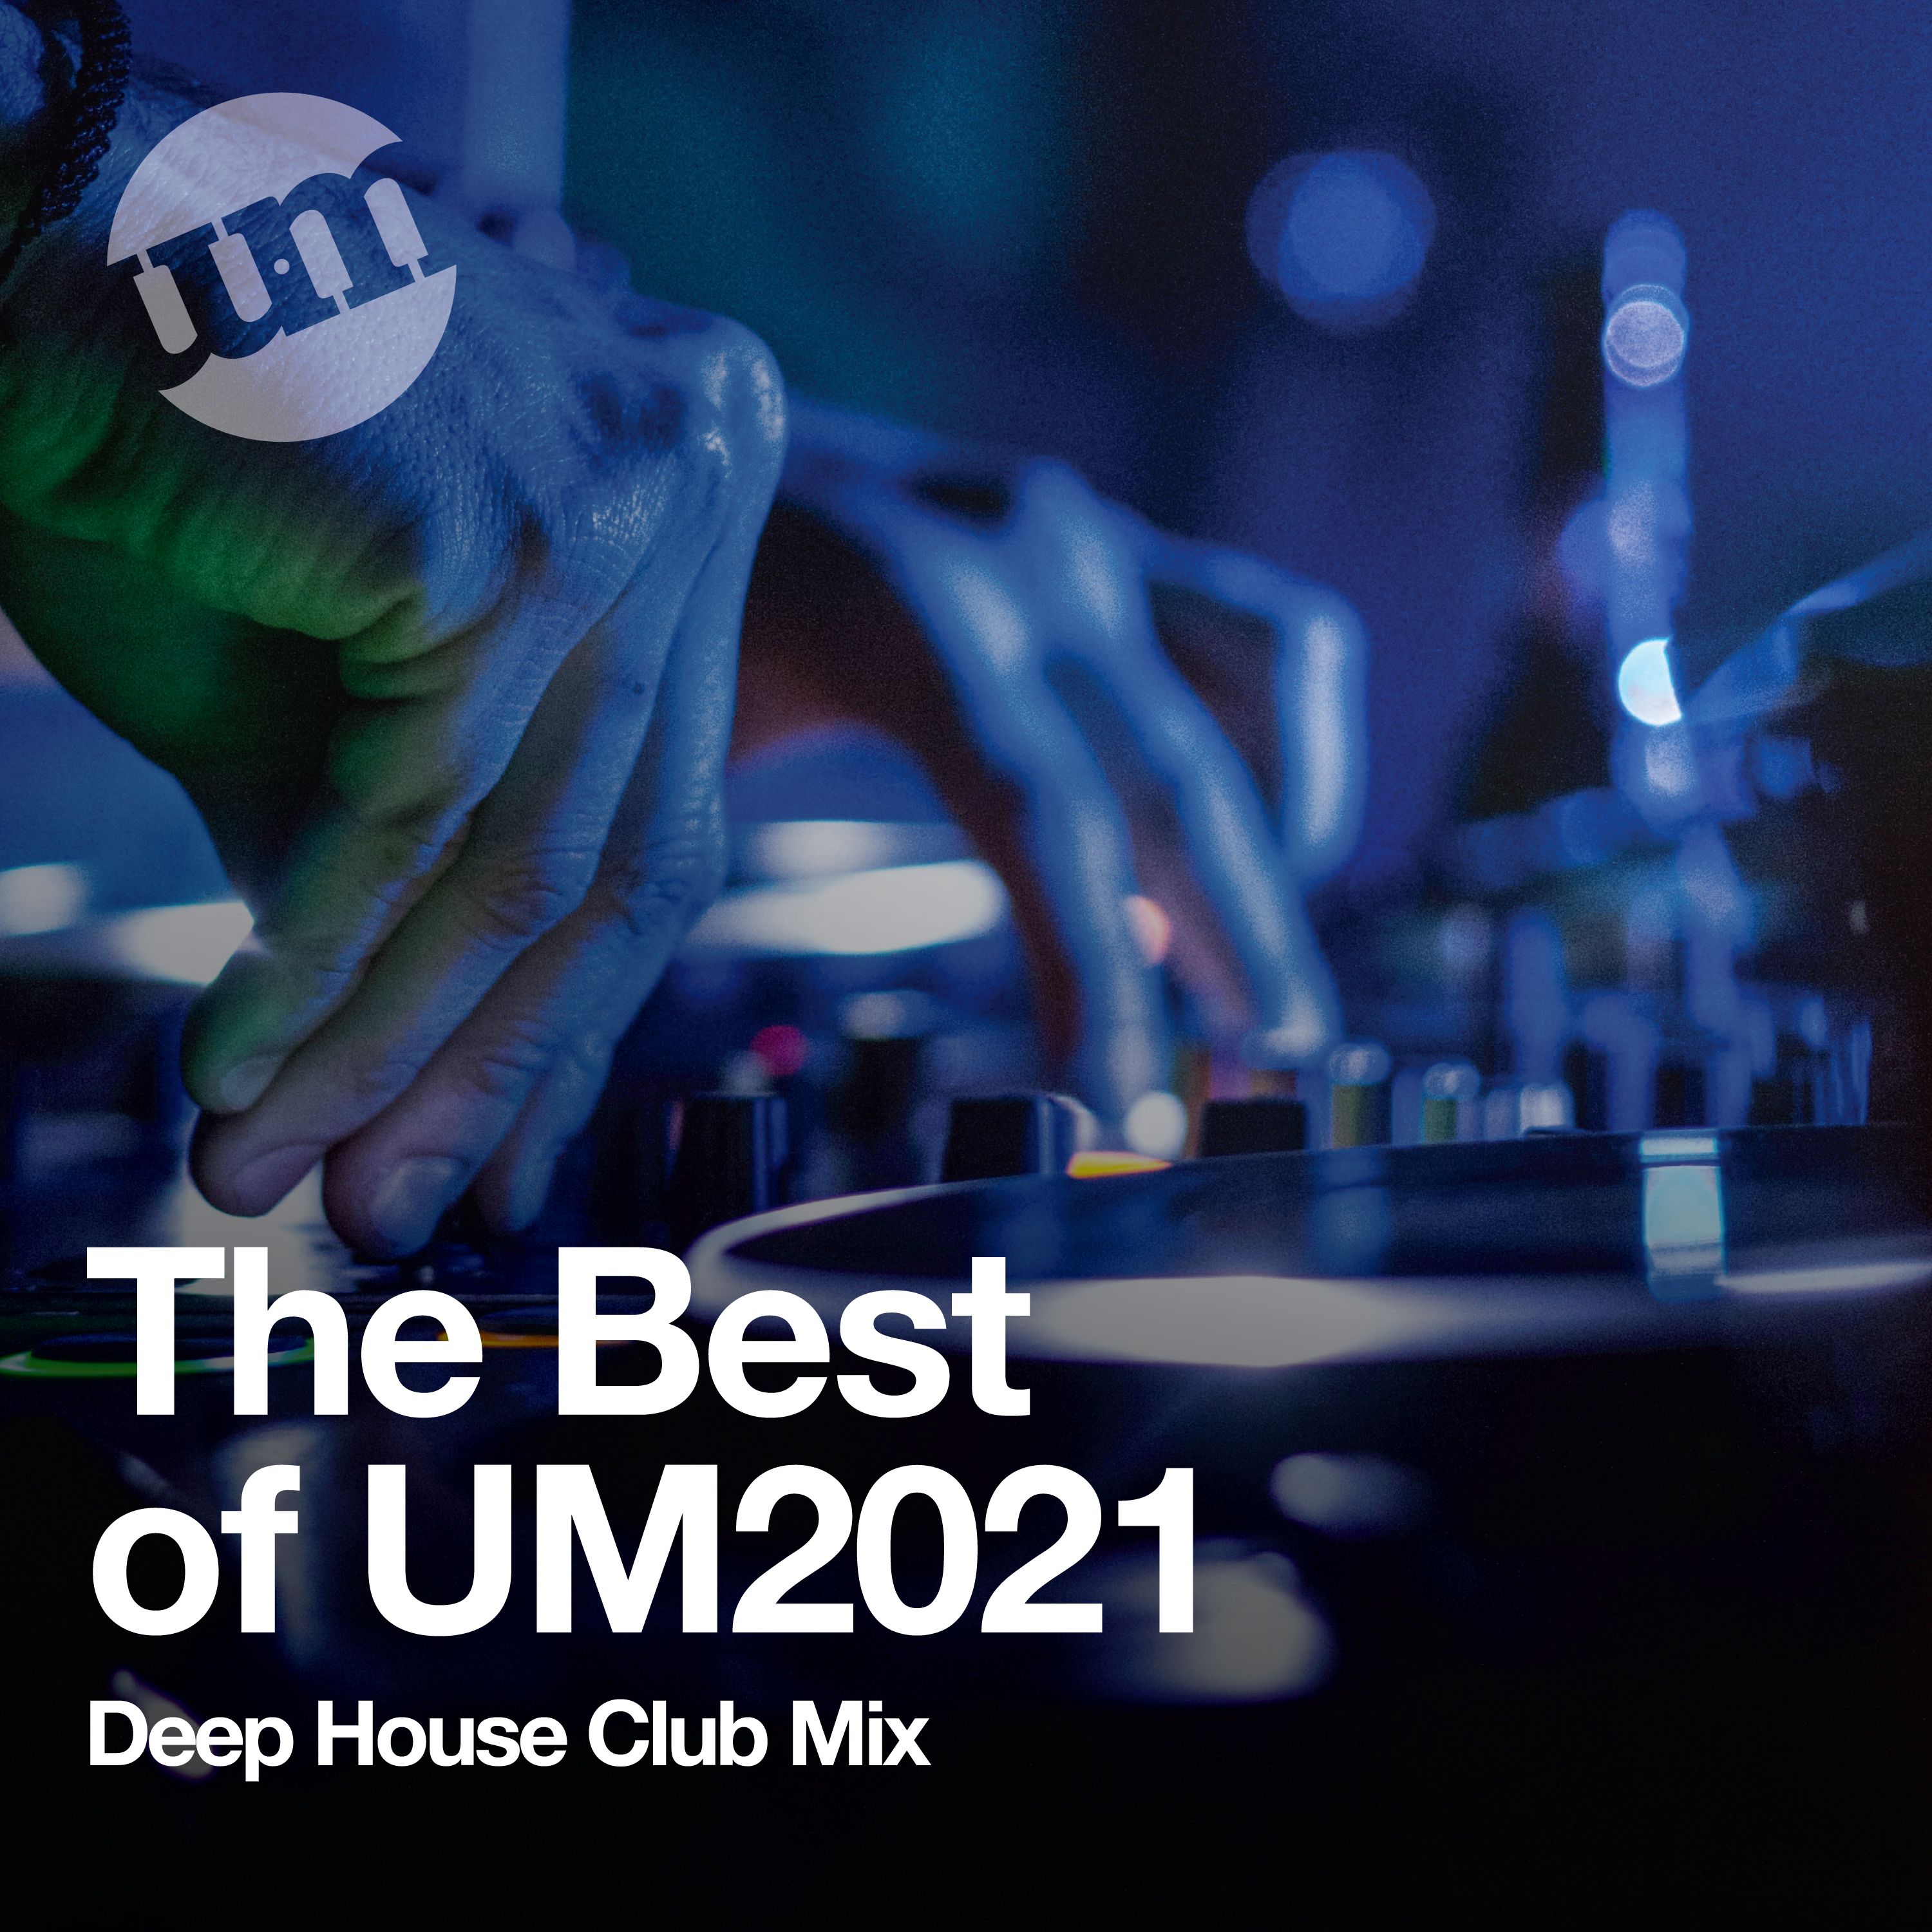 The Best of UM2021 - Deep House Club Mix